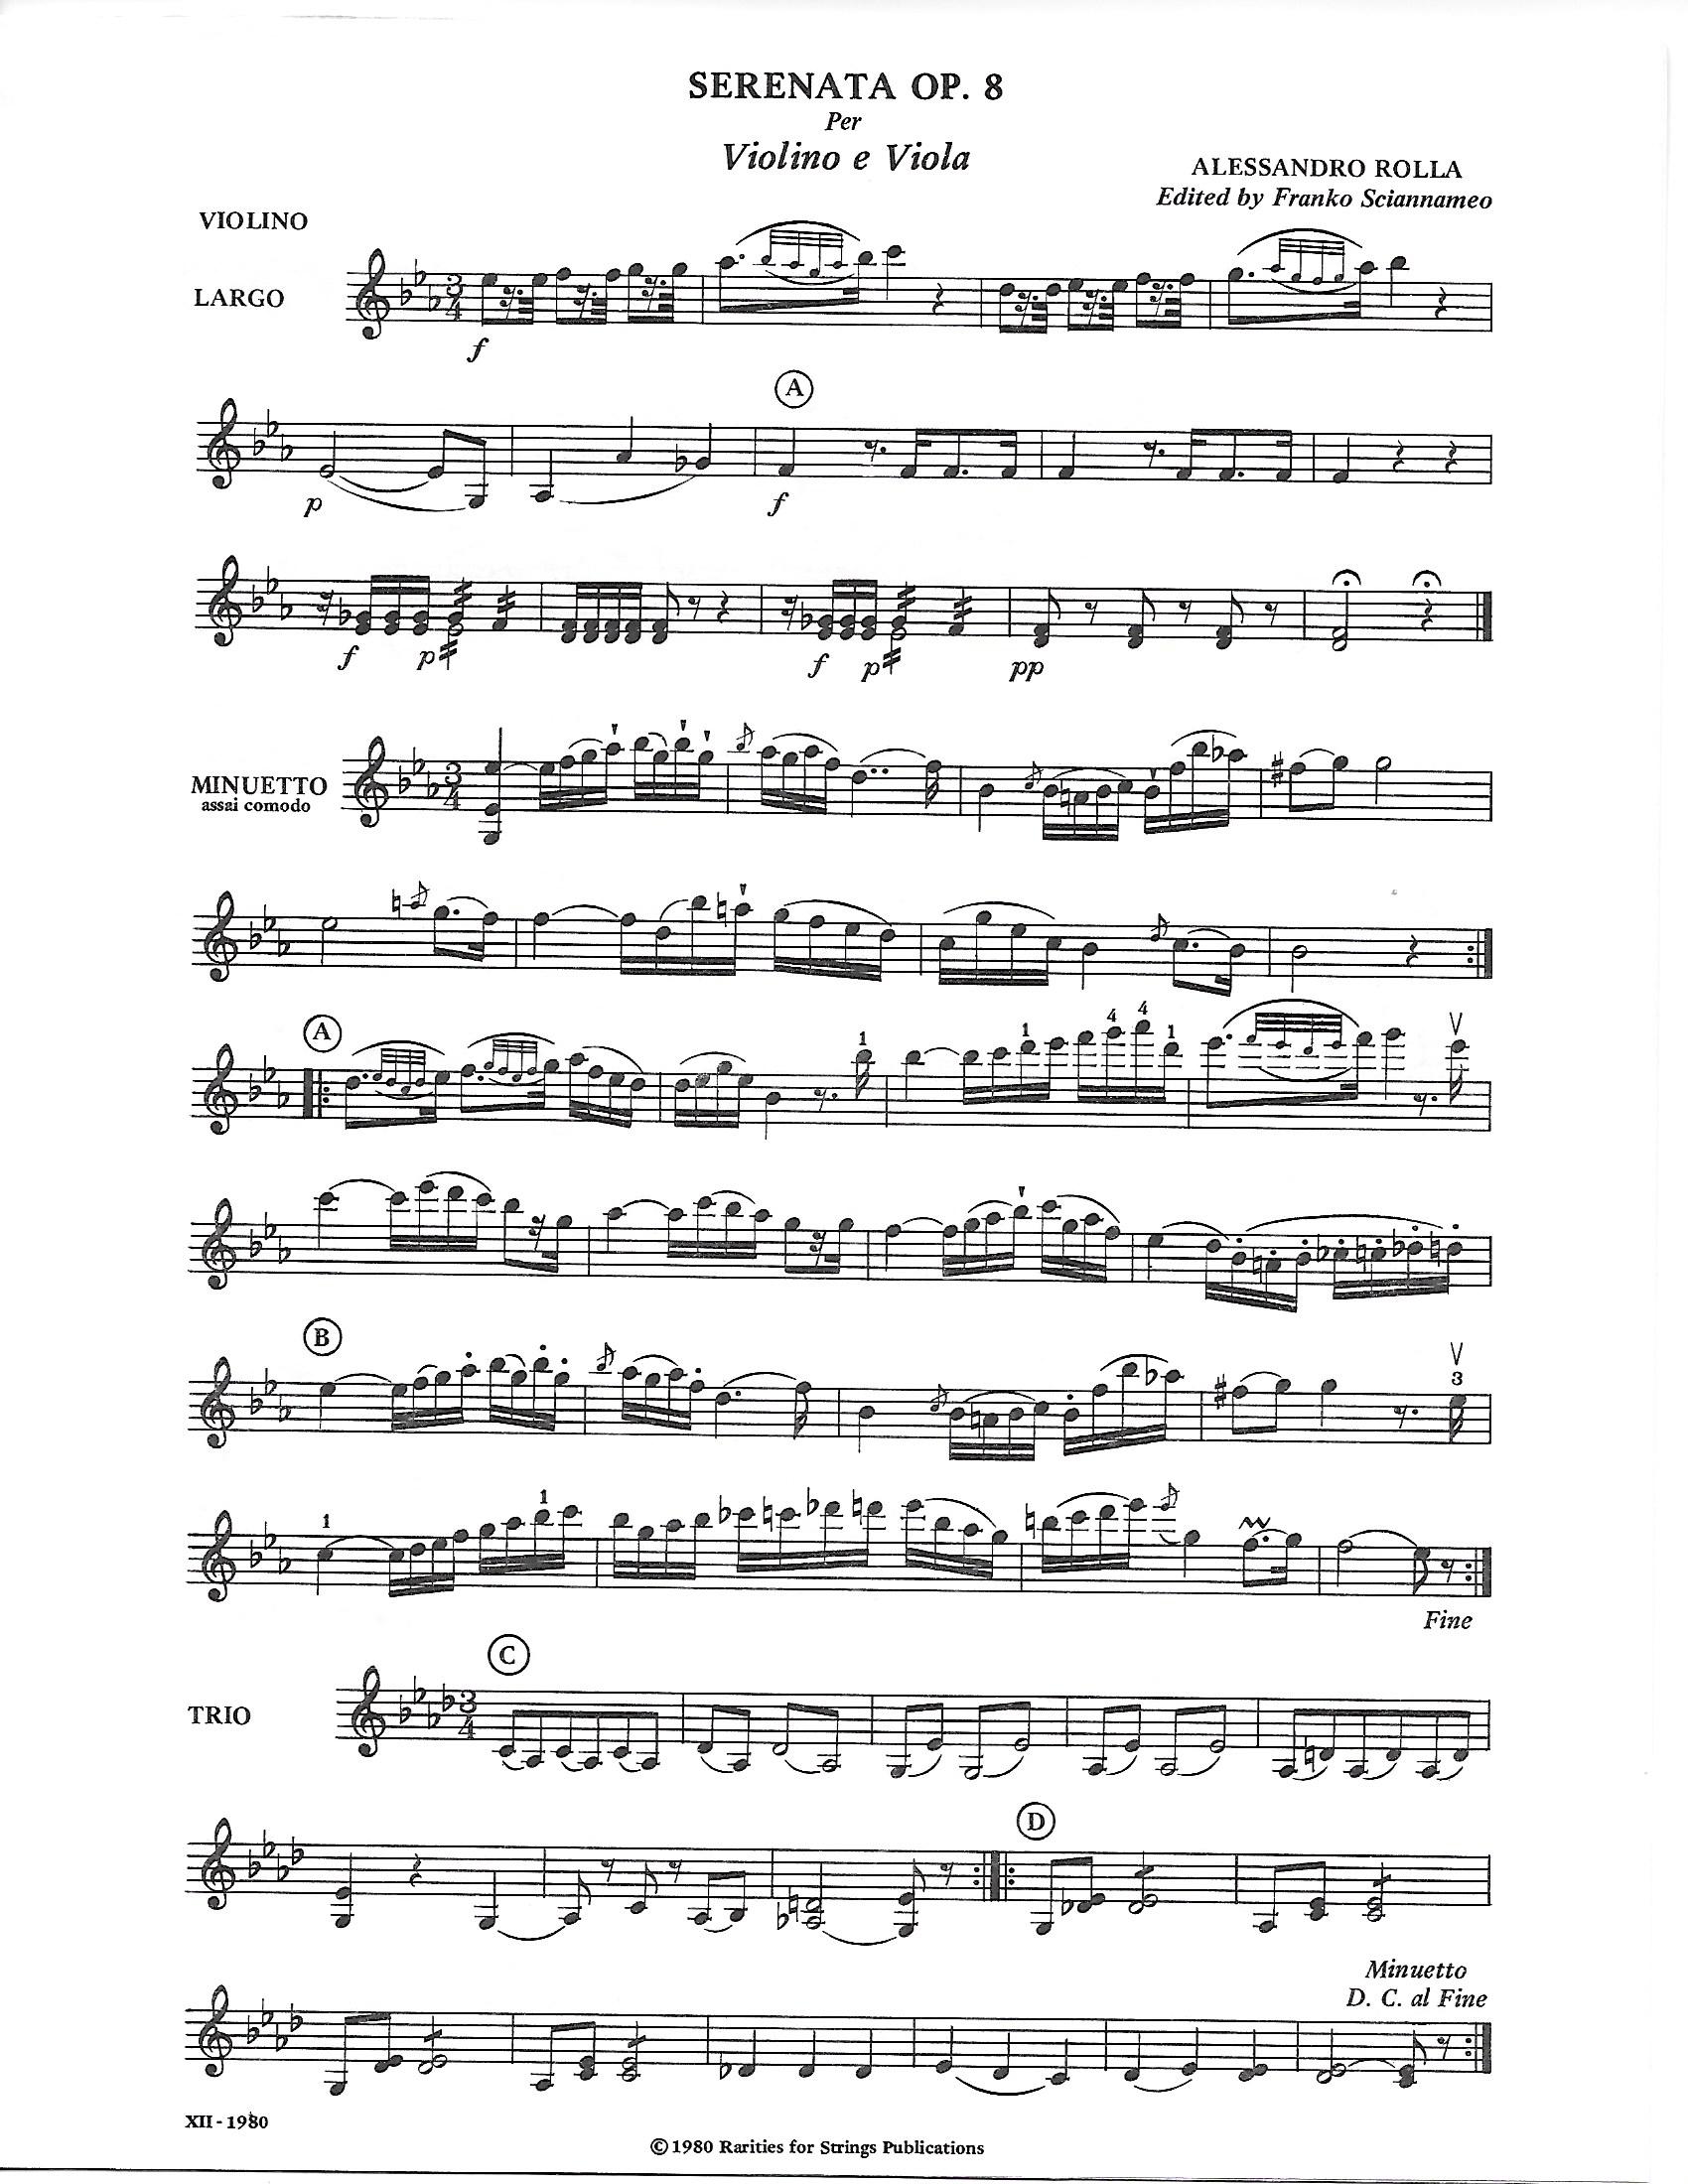 Rolla, Alessandro - Serenata Op. 8 for Violin and Viola - Music